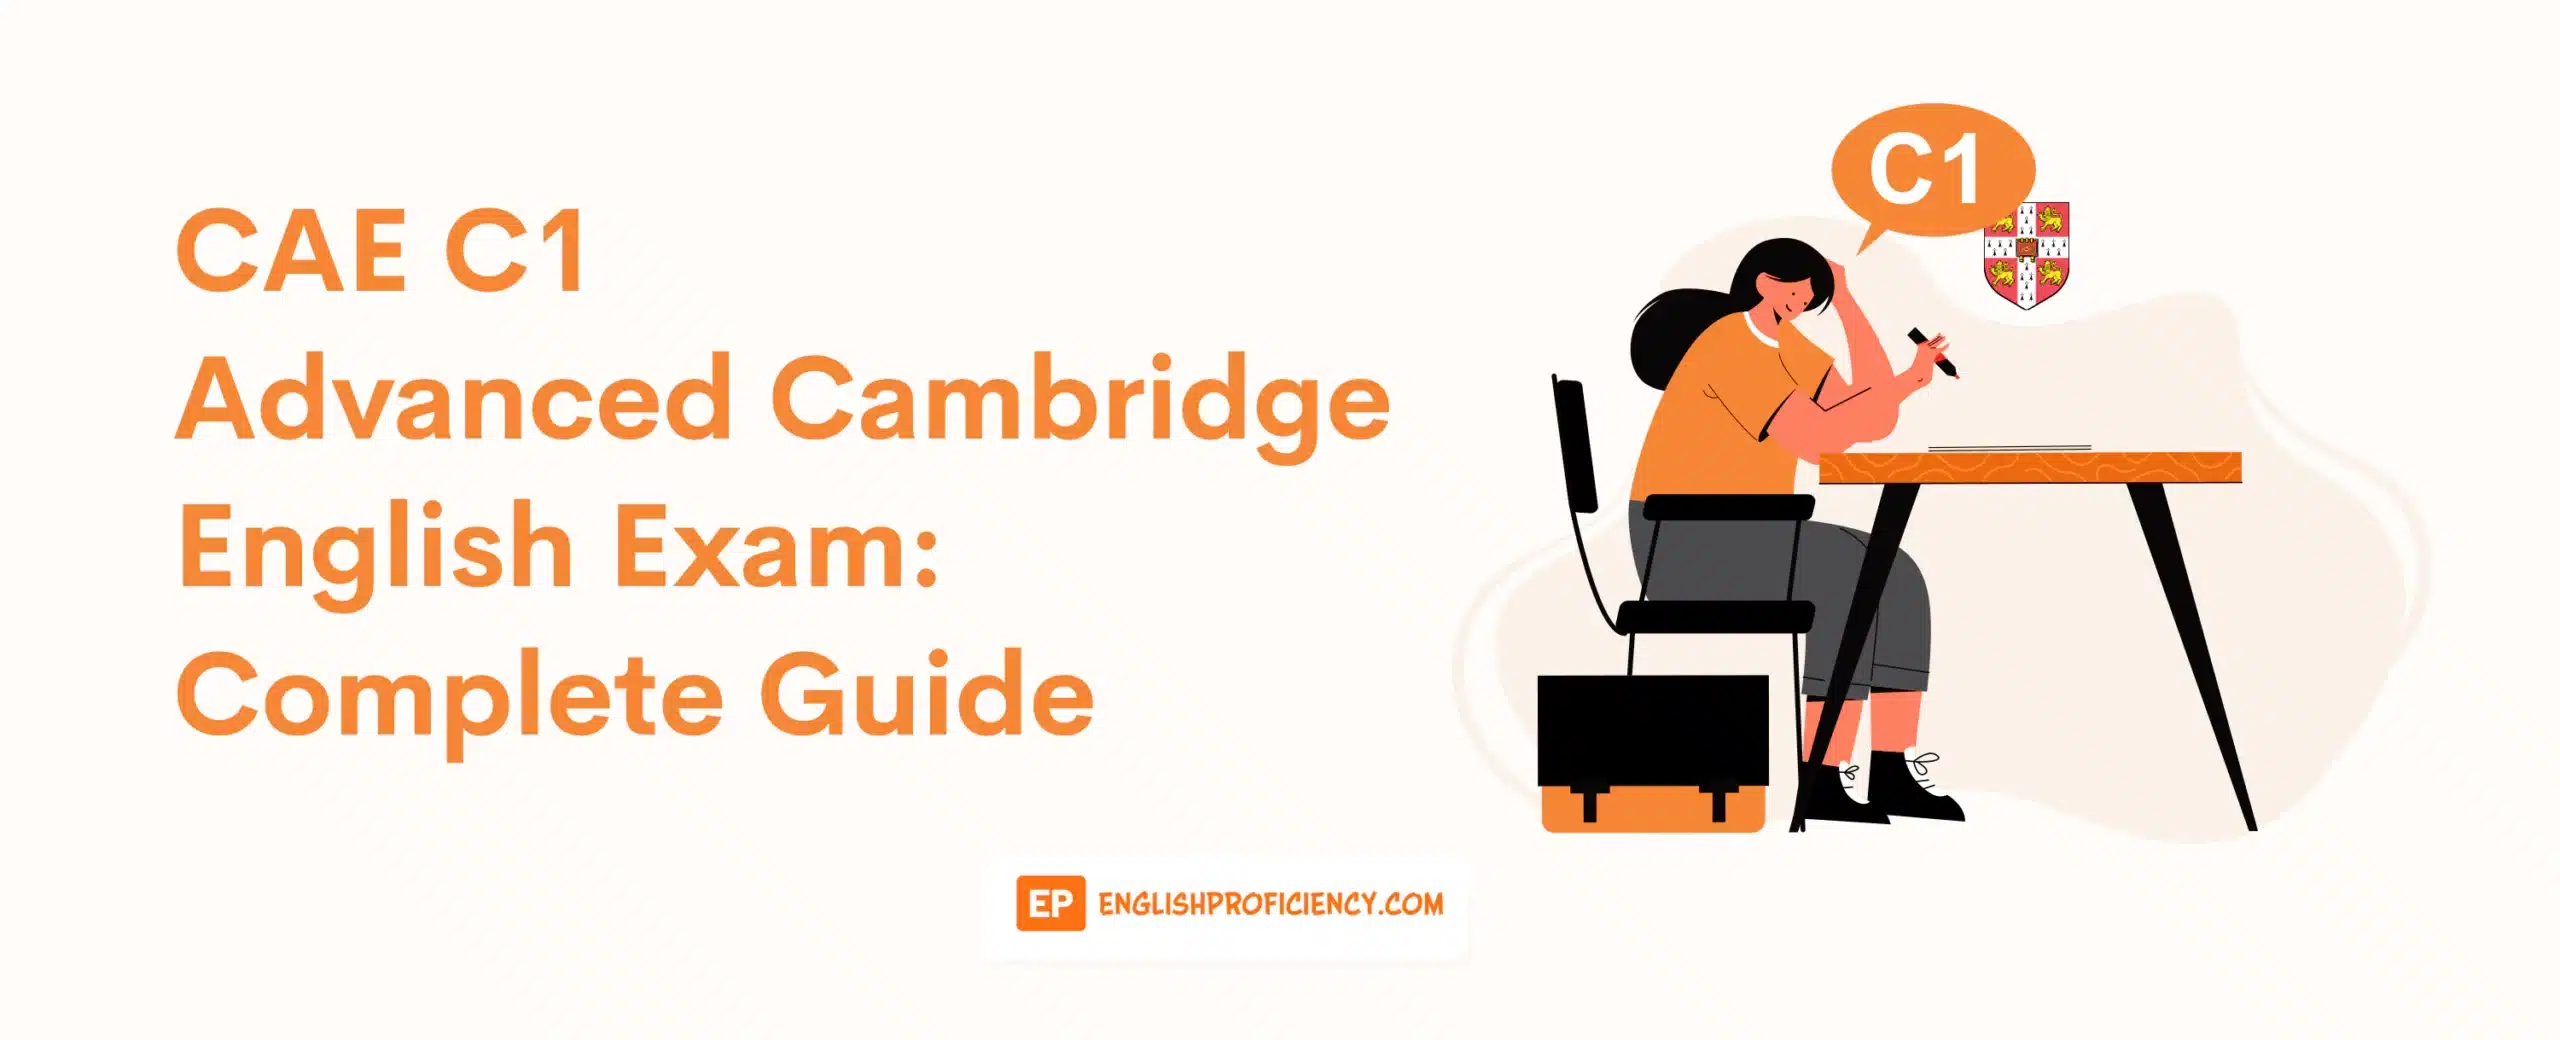 CAE C1 Advanced Cambridge English Exam Complete Guide